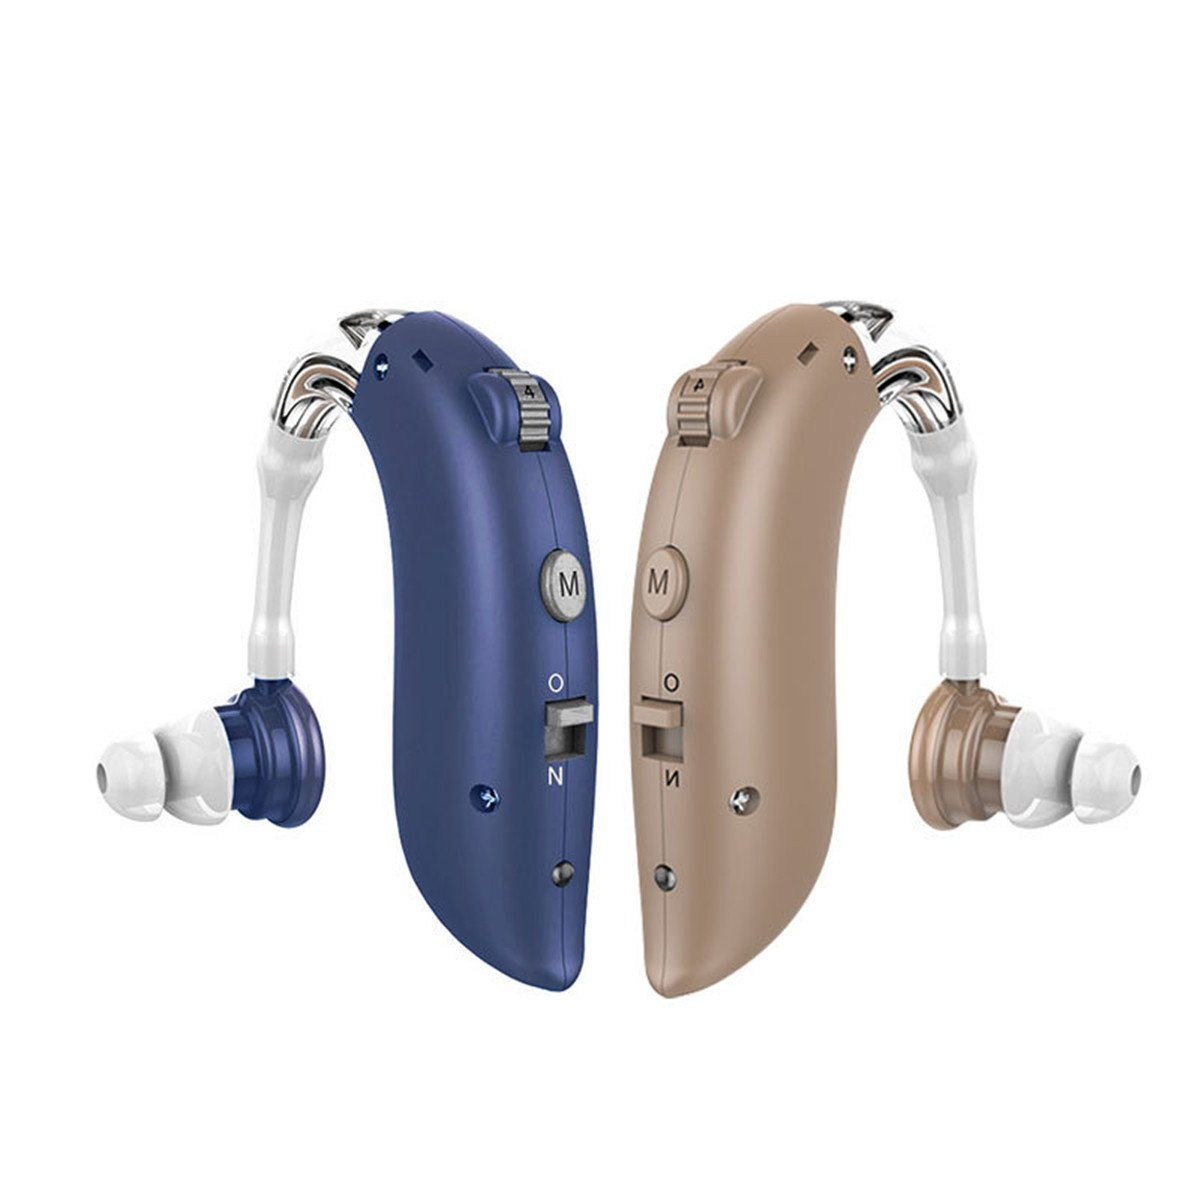 SYNTEK Hörgerät,Hörverstärker-Smart Hörverstärker mit Geräuschreduzierung und Anpassung automatischer Hörgerät